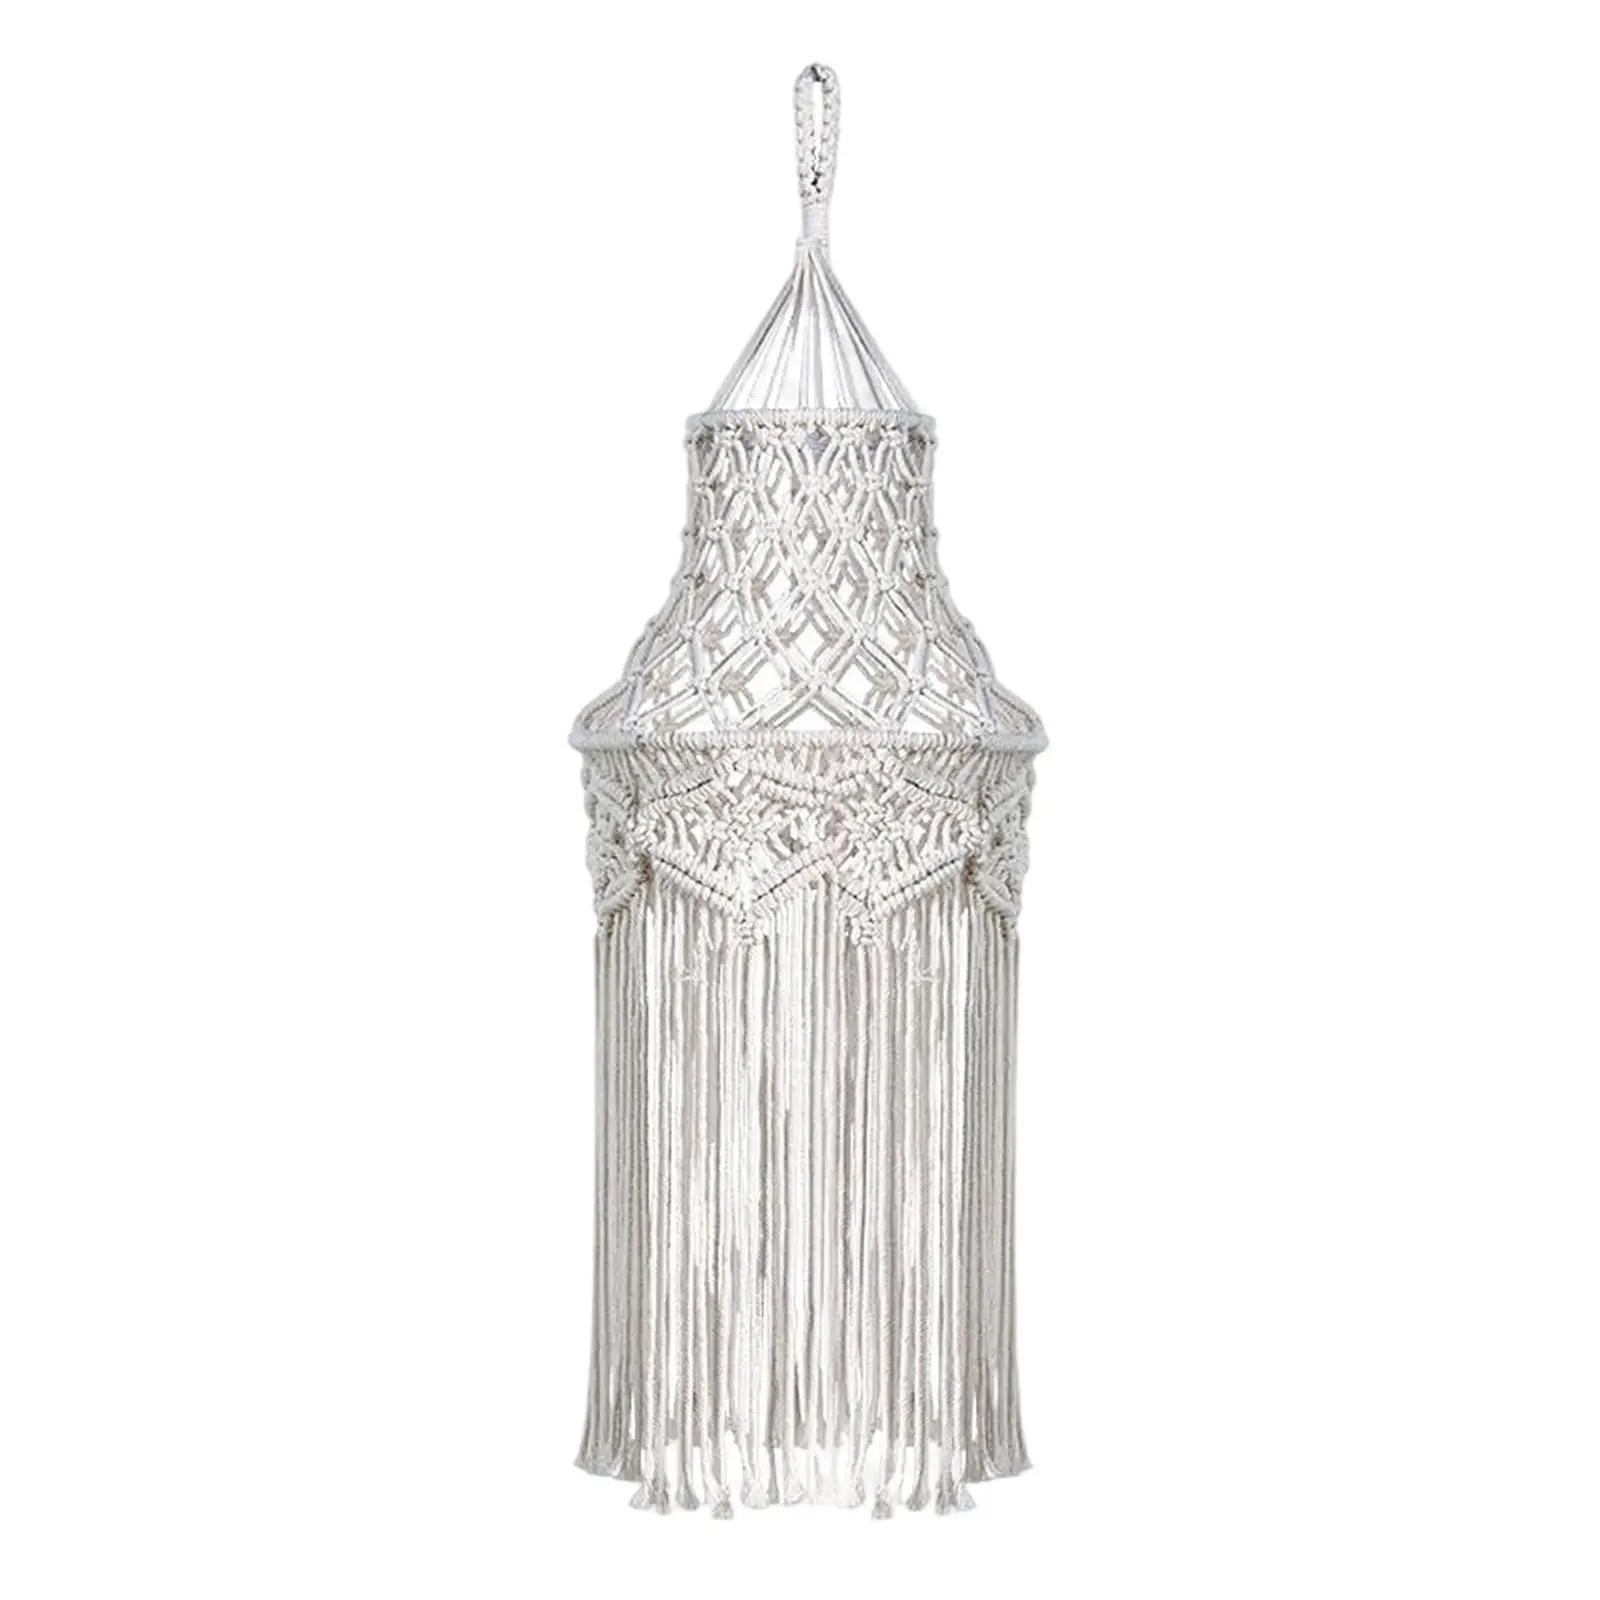 Modern Macrame Tassel Lamp Shade Chandelier Hand Woven Ceiling Pendant Light Cover Hanging Lampshade for Dorm Home Wedding Decor